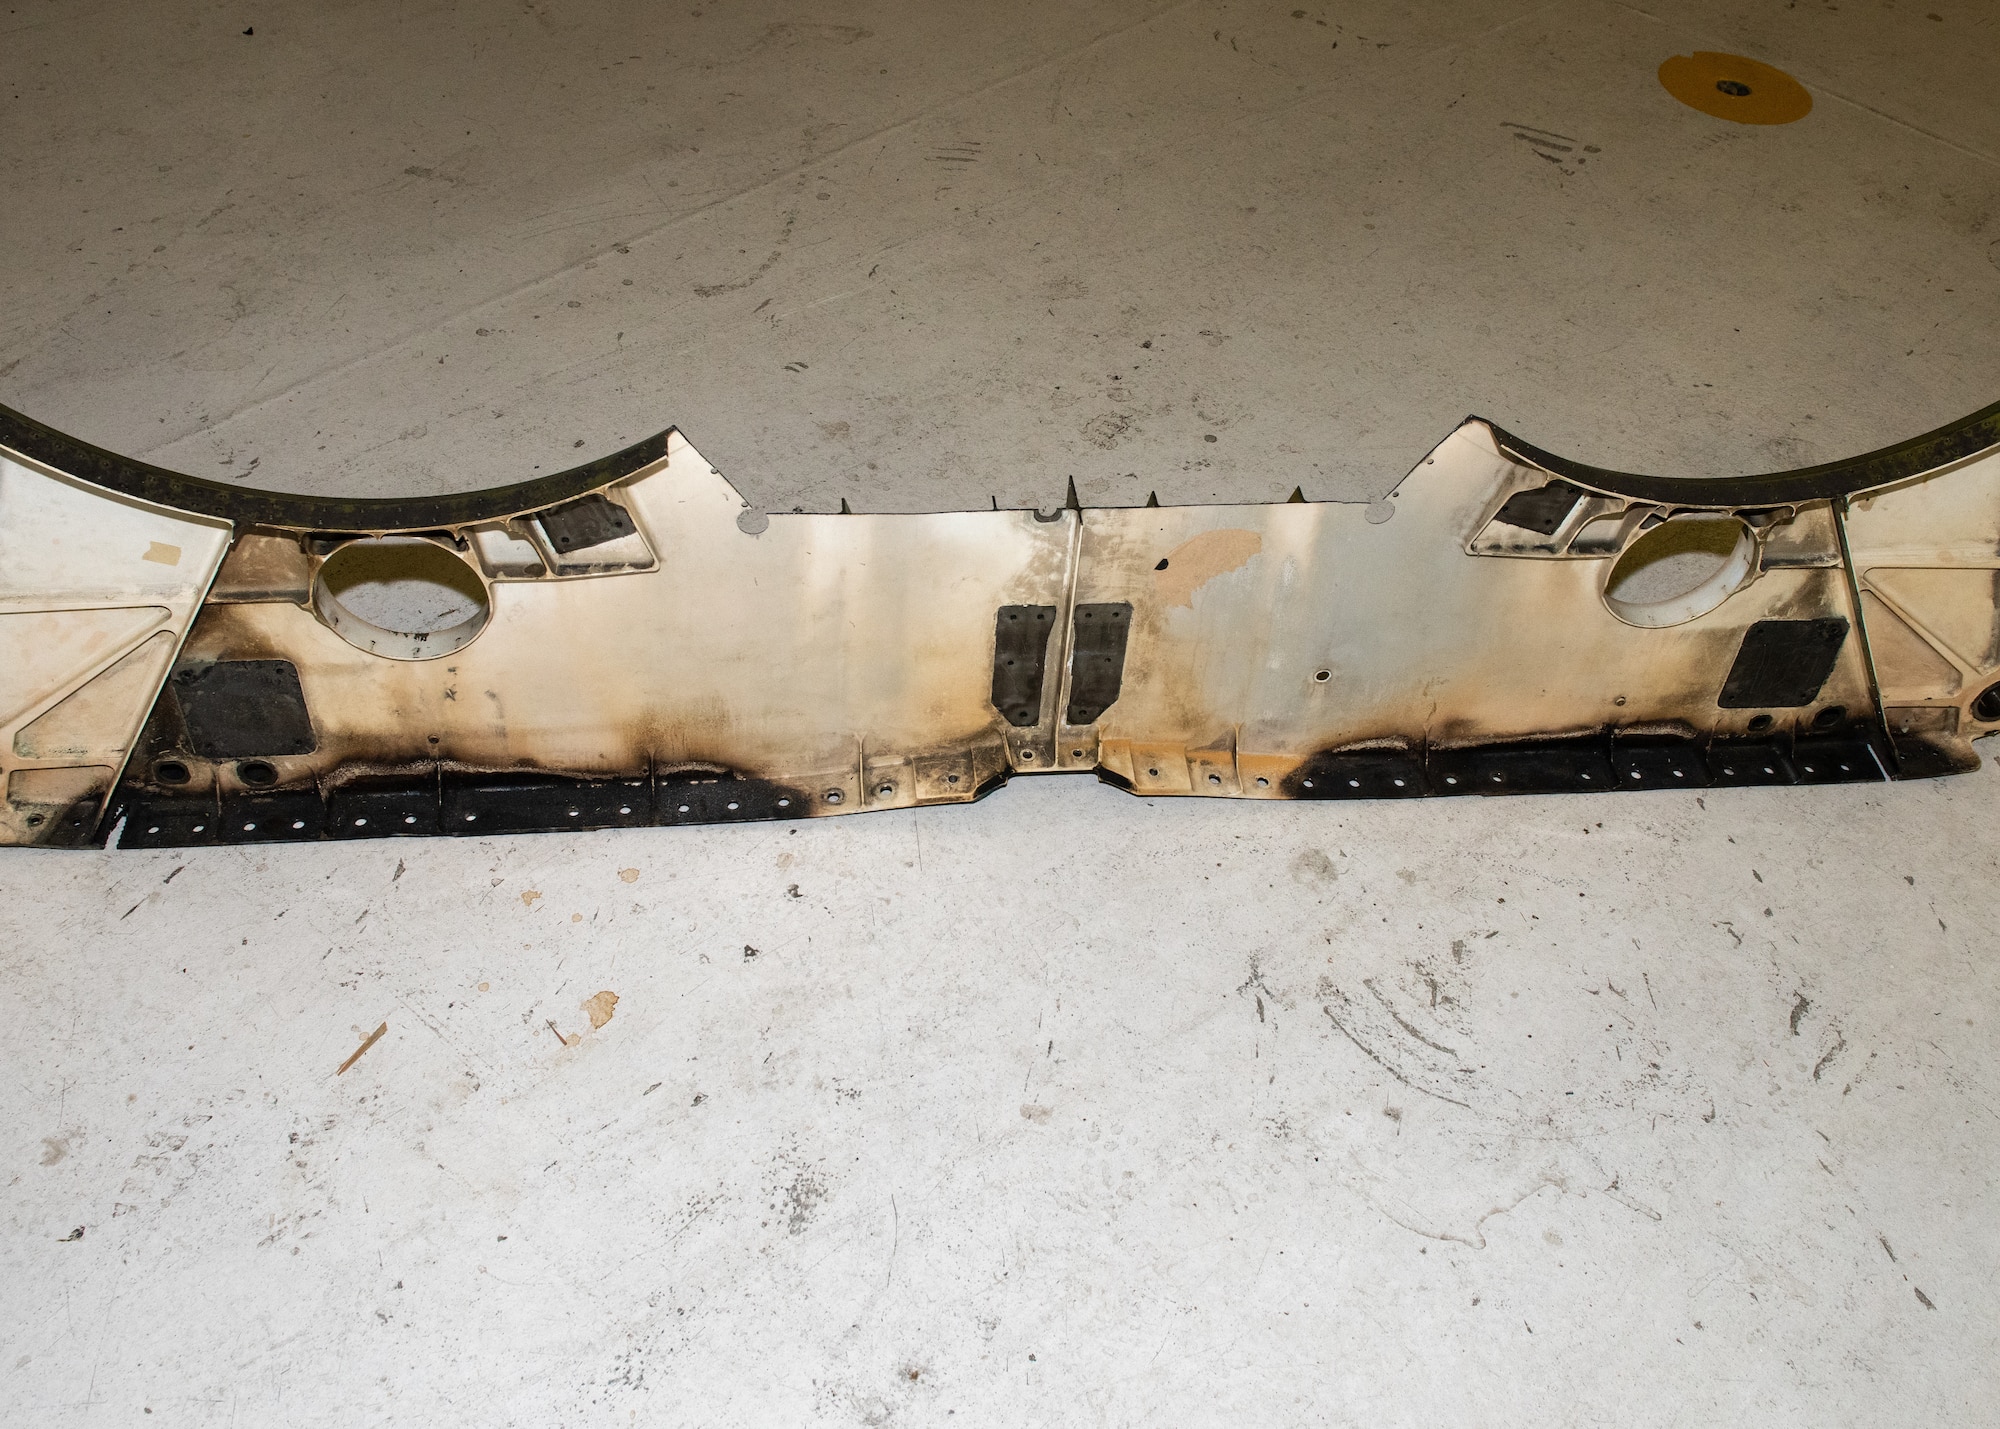 Damaged F-22 aircraft part.